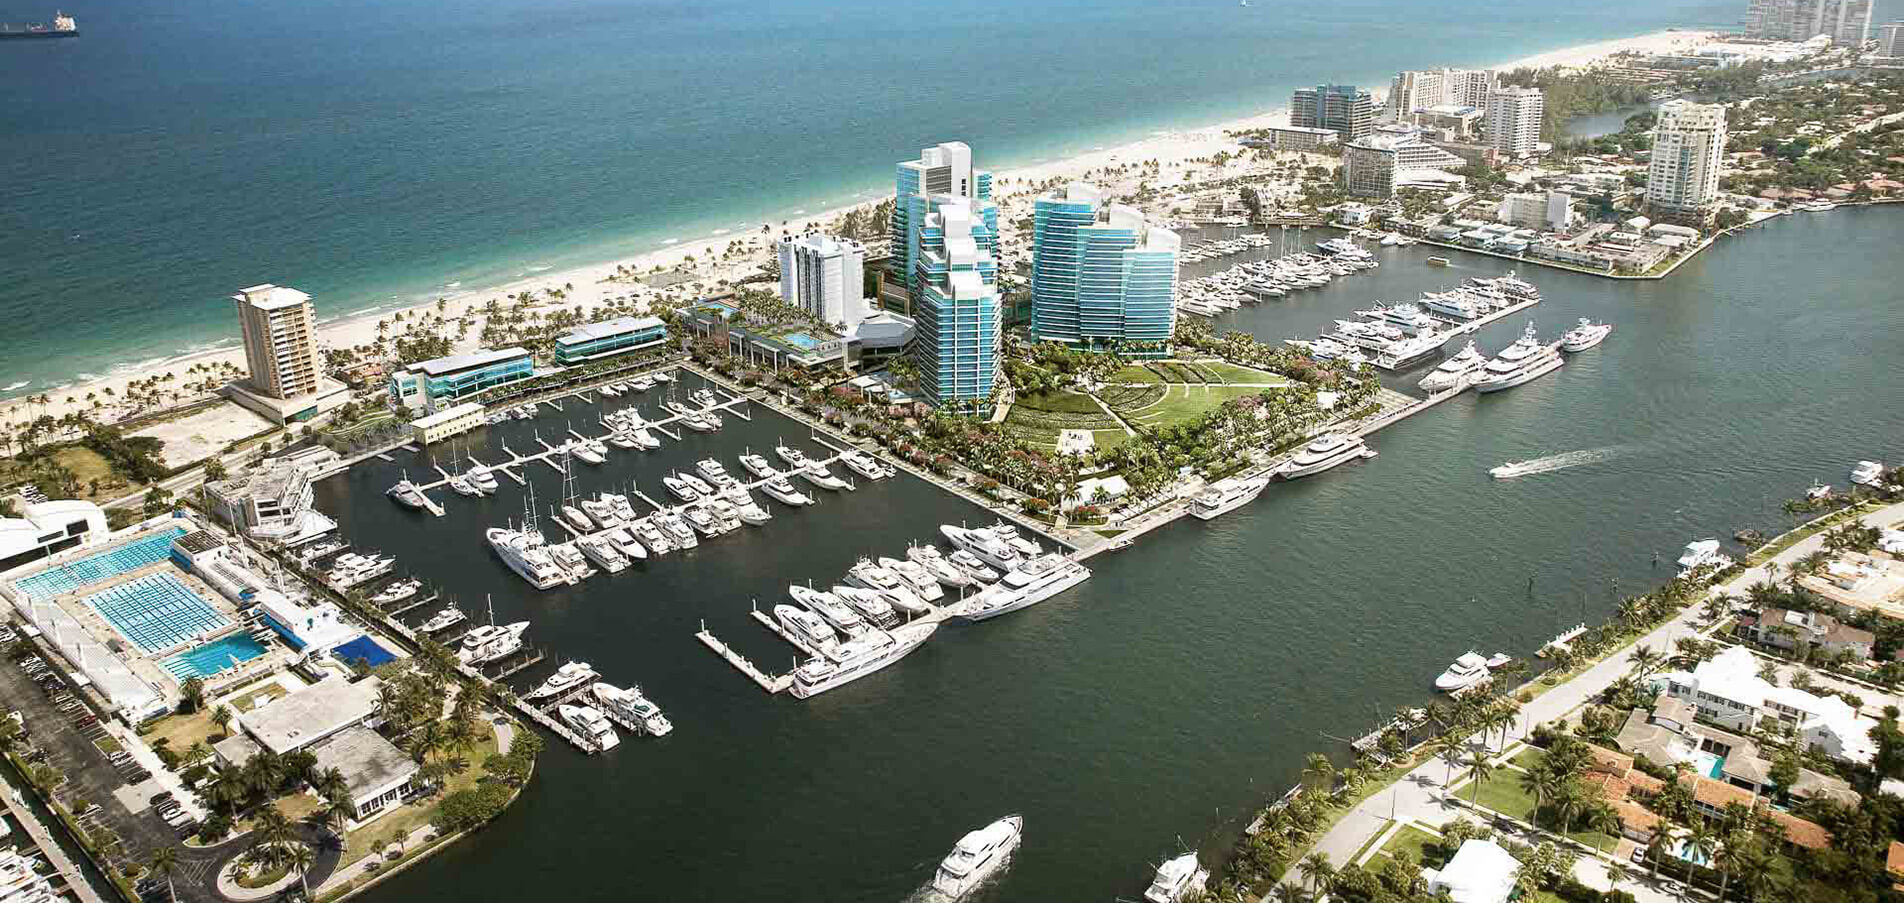 Location de yacht de luxe Floride 